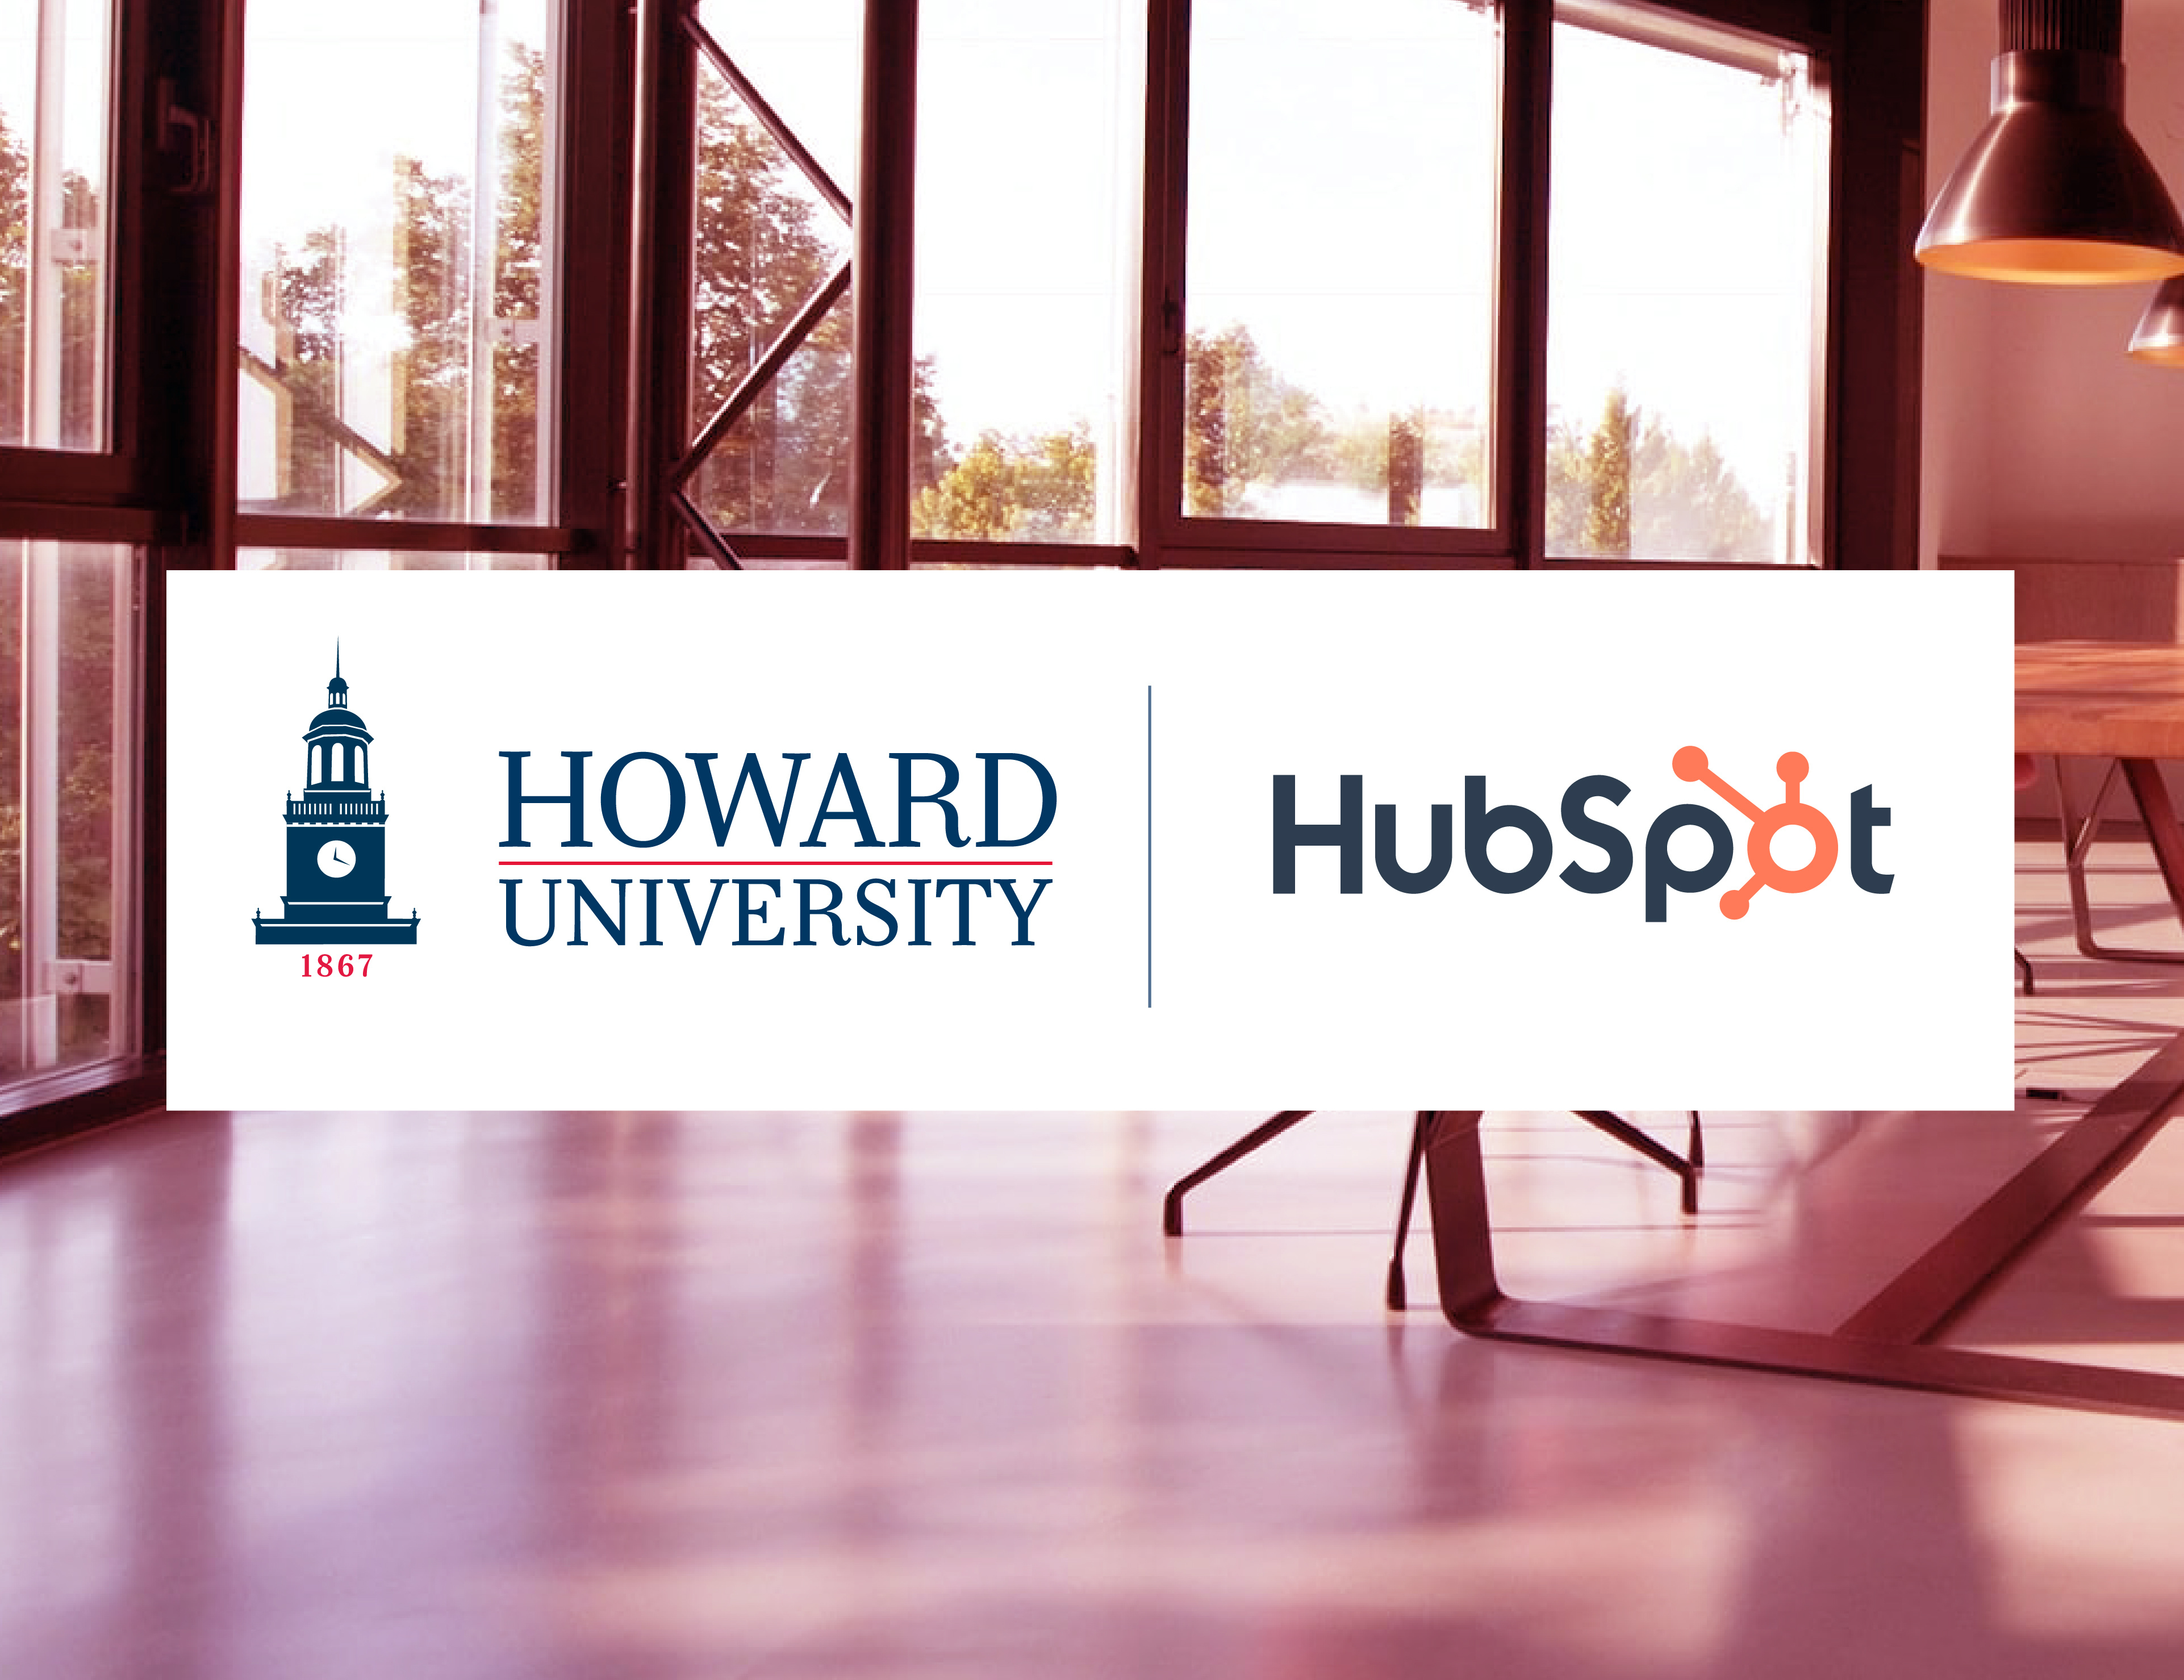 Howard University School of Business and HubSpot Partner to Establish a Center for Digital Business